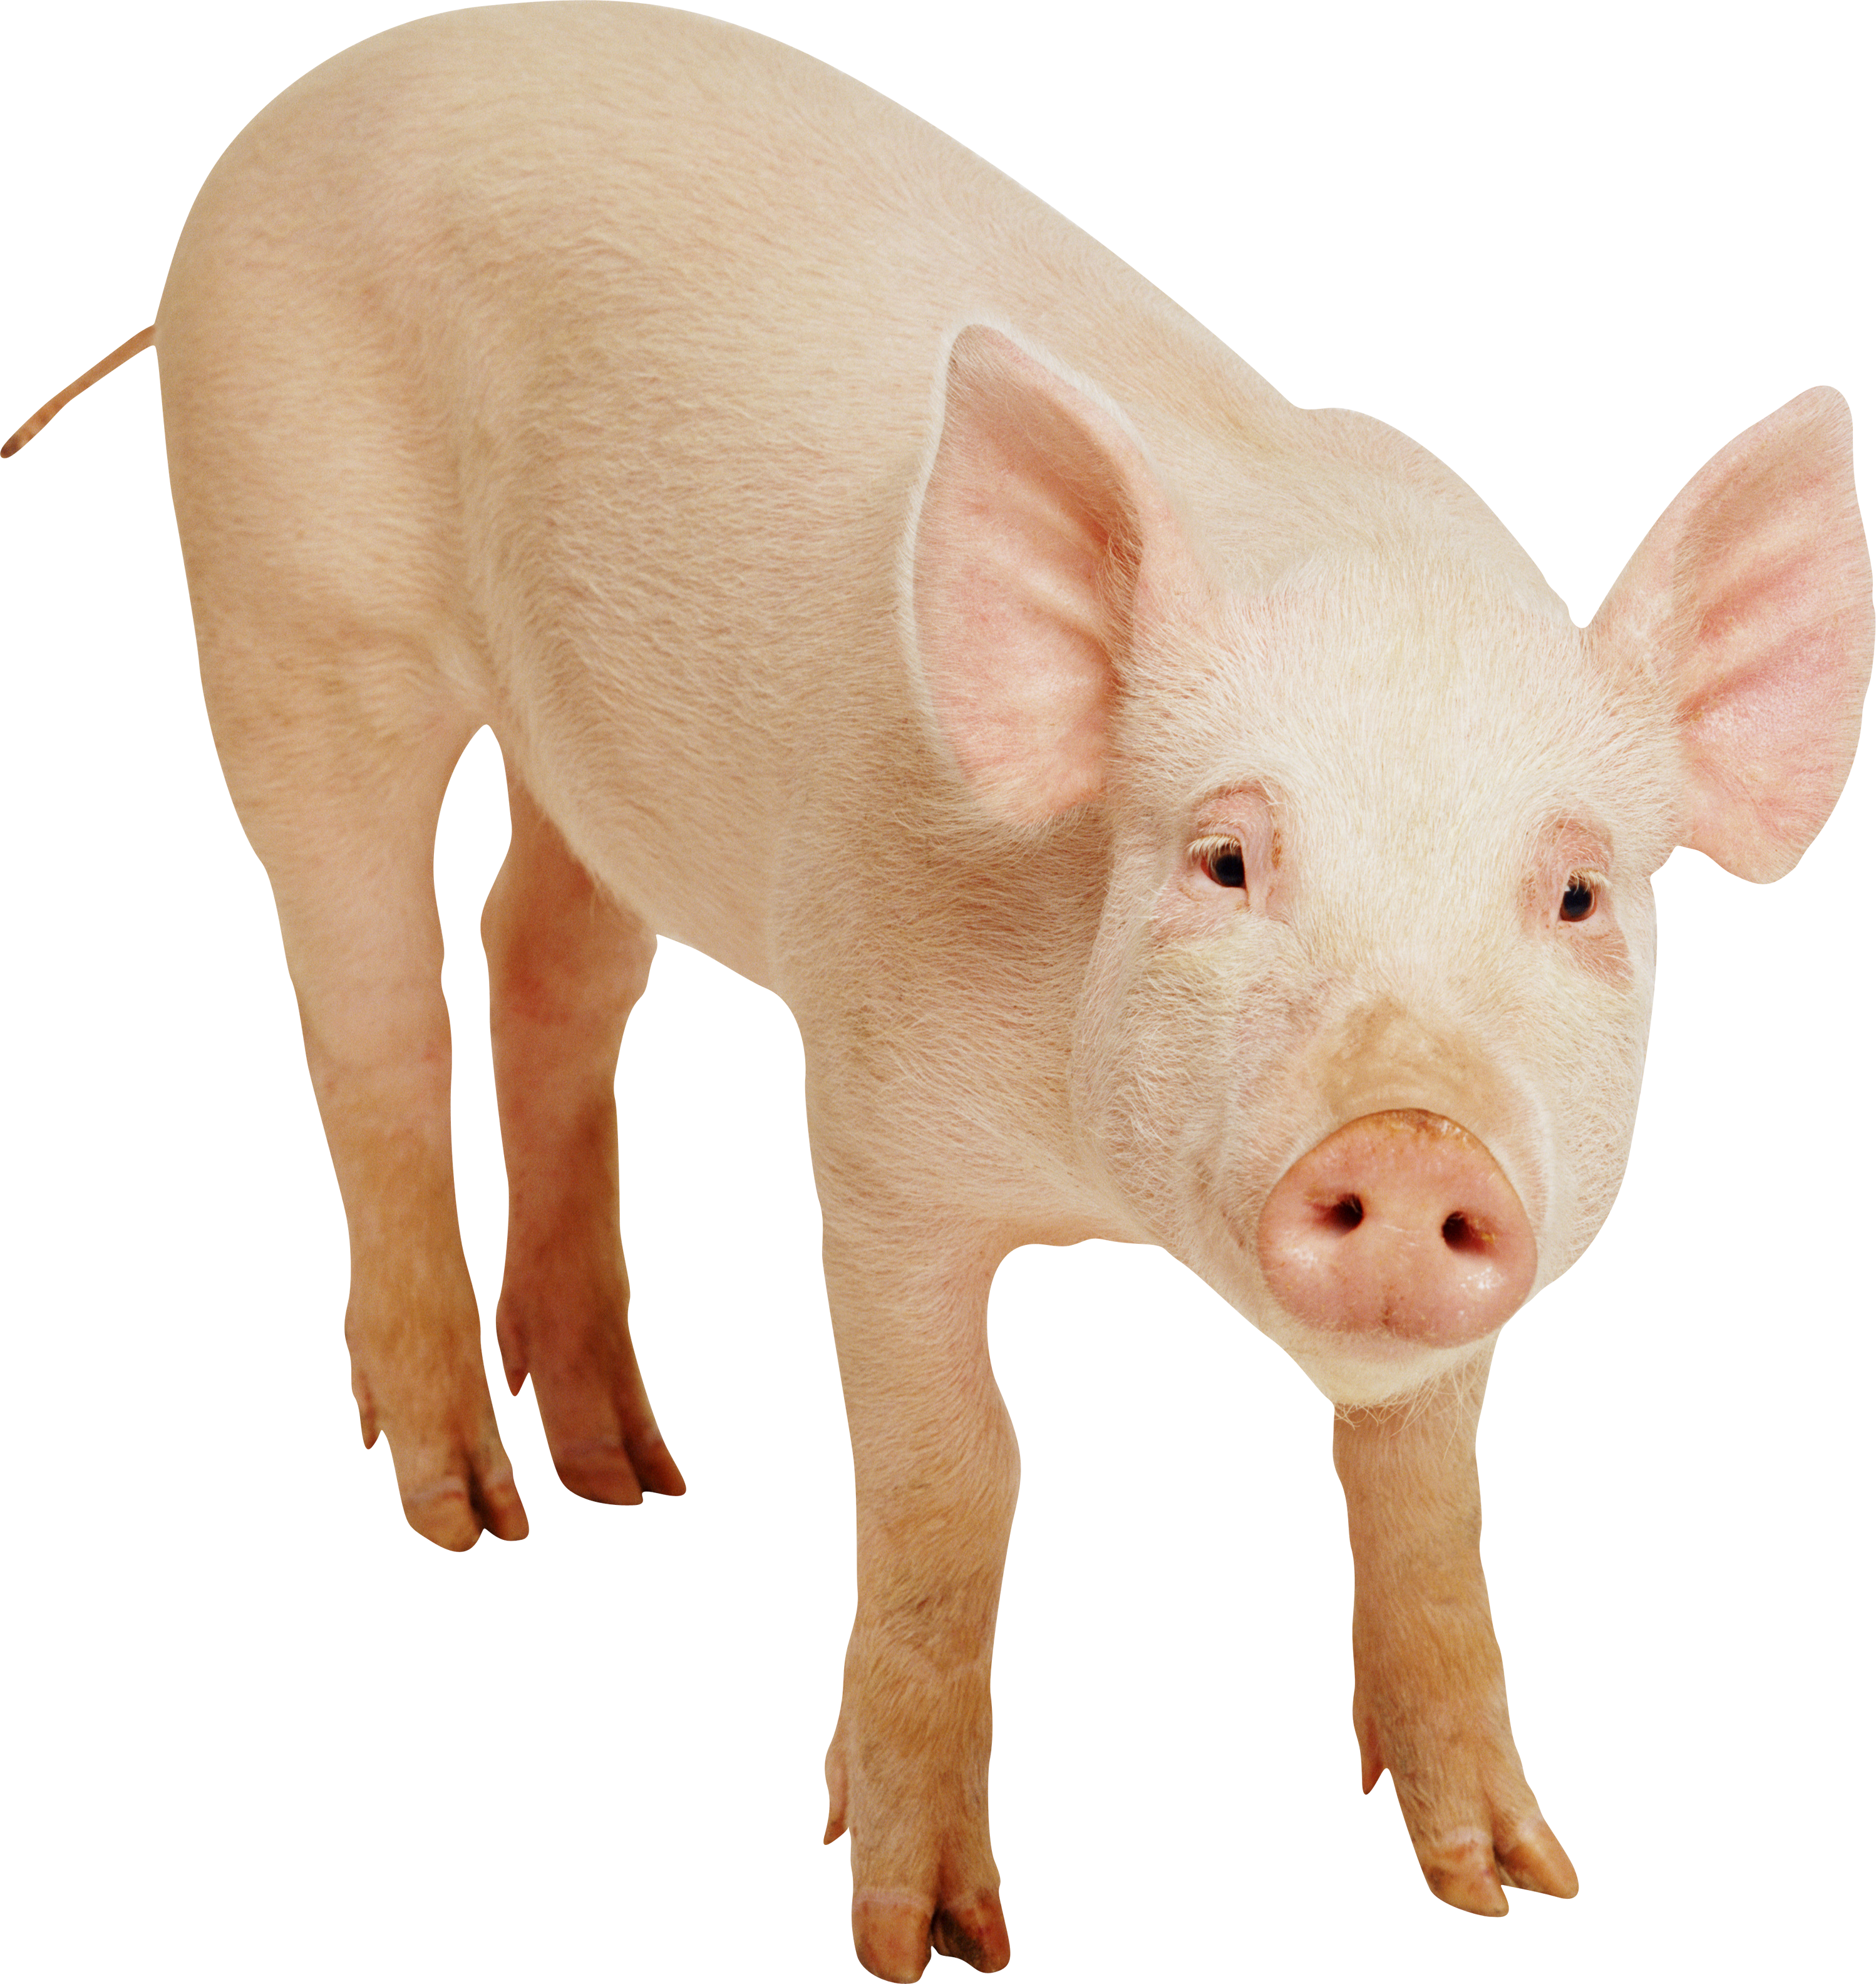 Pig HD PNG - 89285